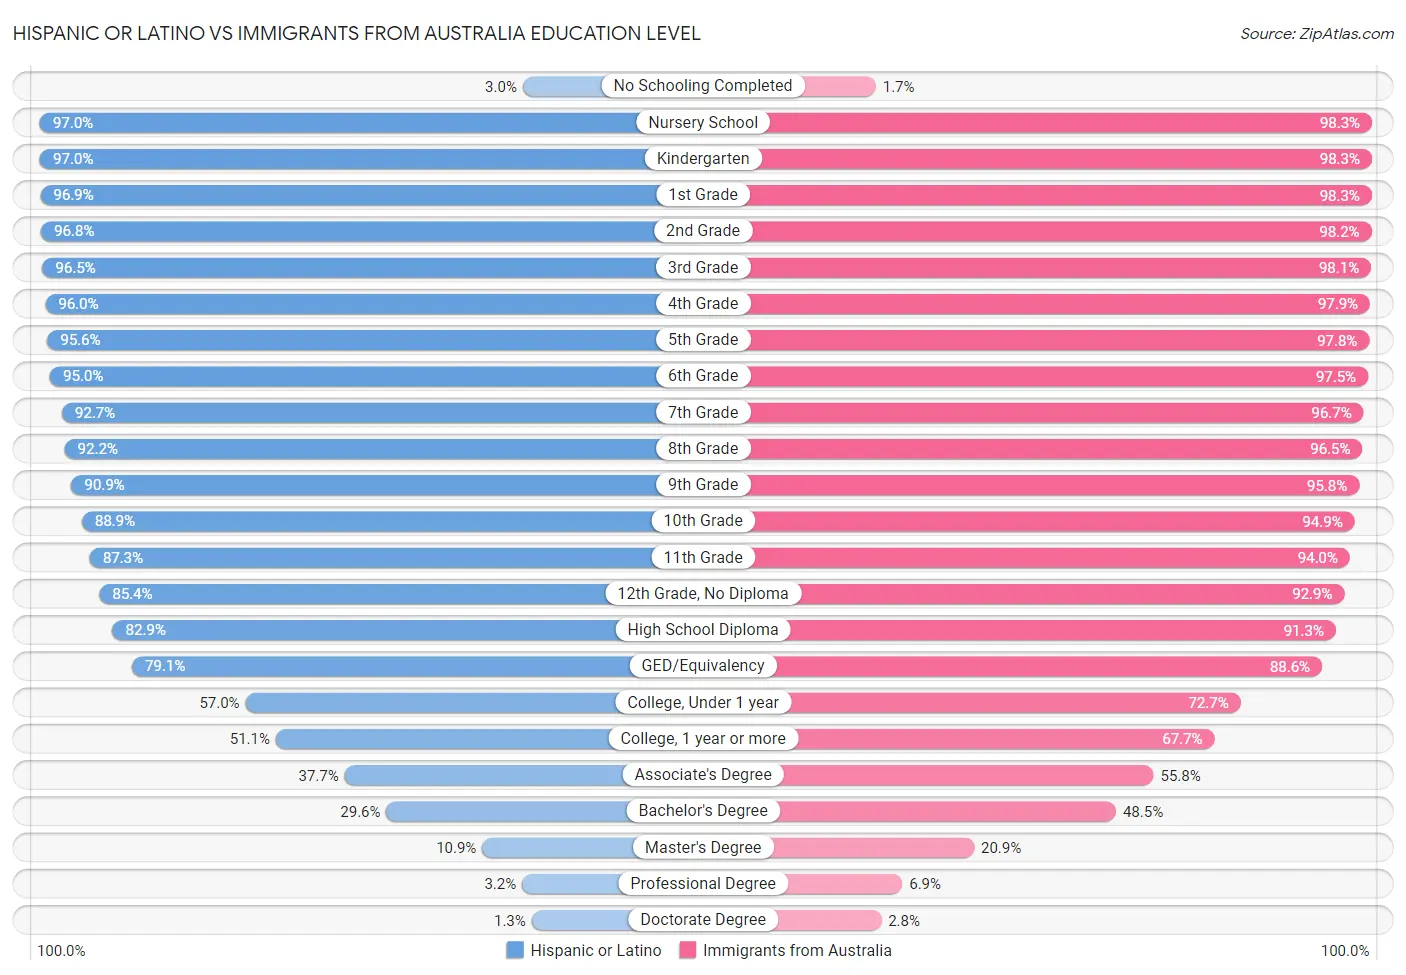 Hispanic or Latino vs Immigrants from Australia Education Level